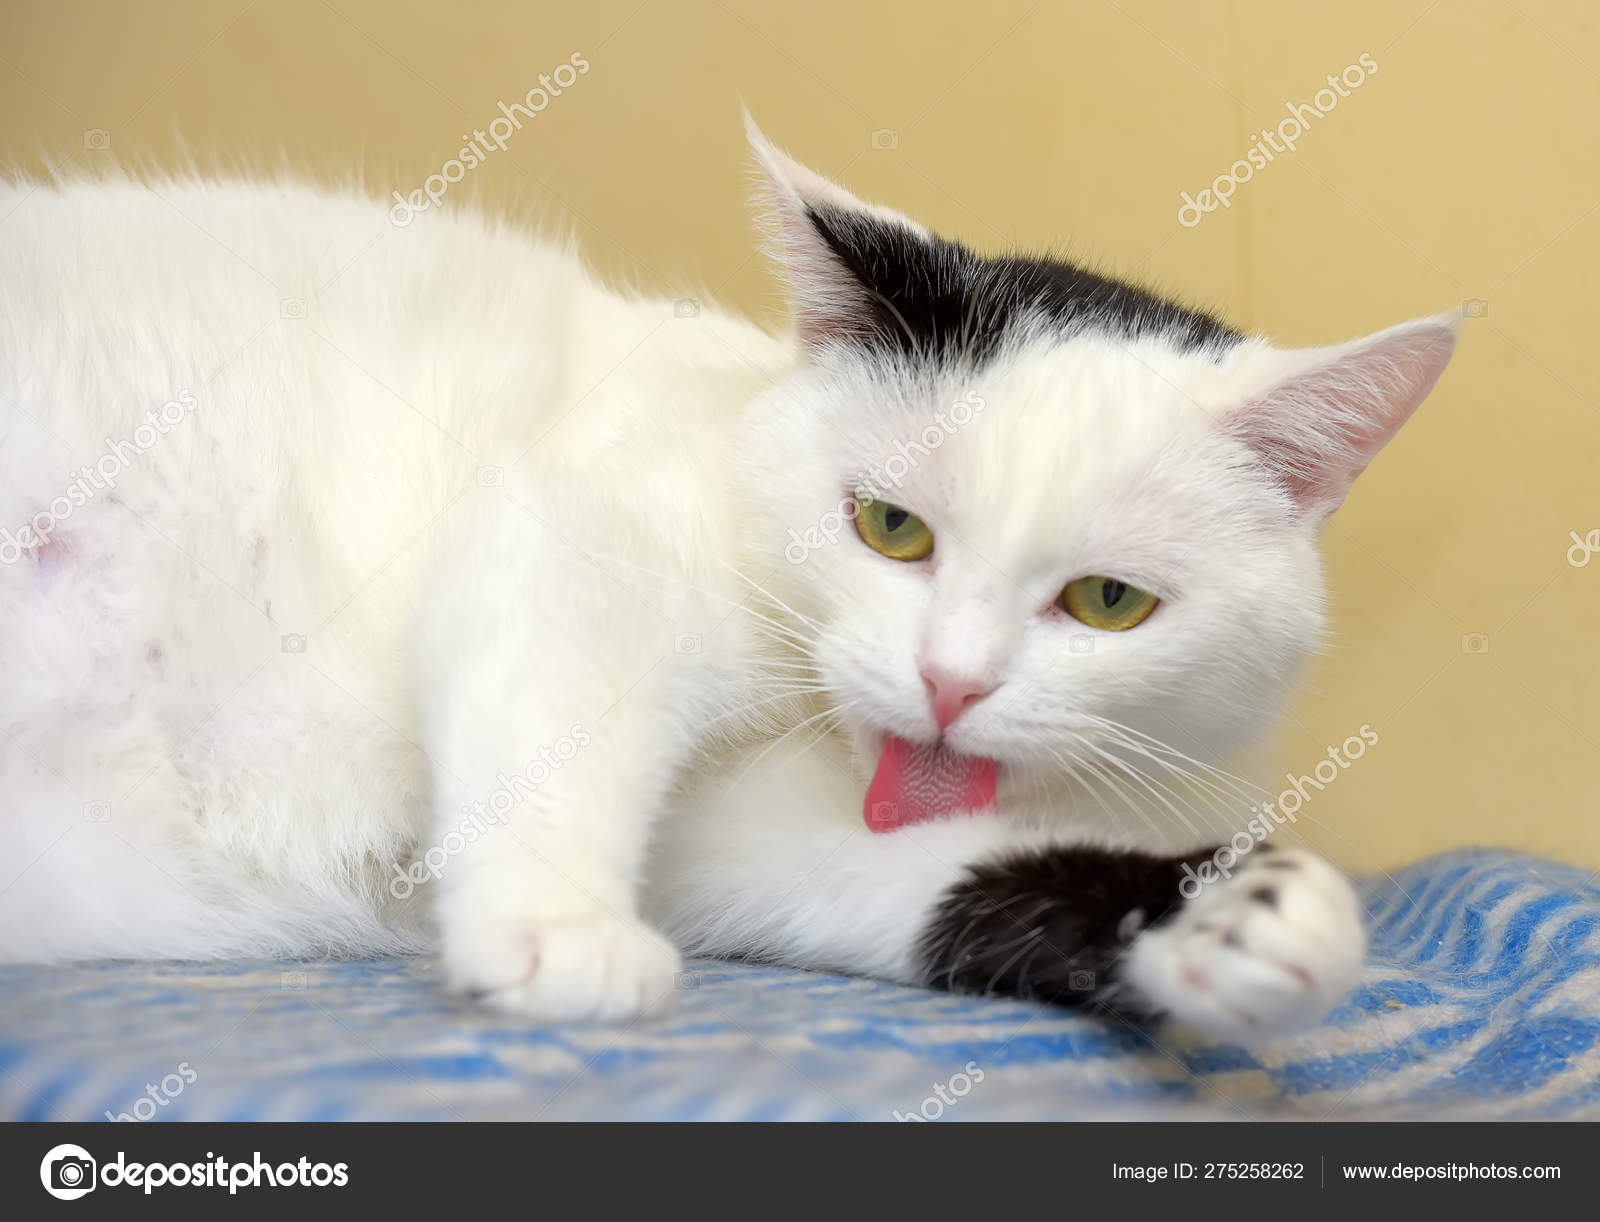 Cute White And Black European Shorthair Cat Washes Stock Photo C Evdoha 275258262